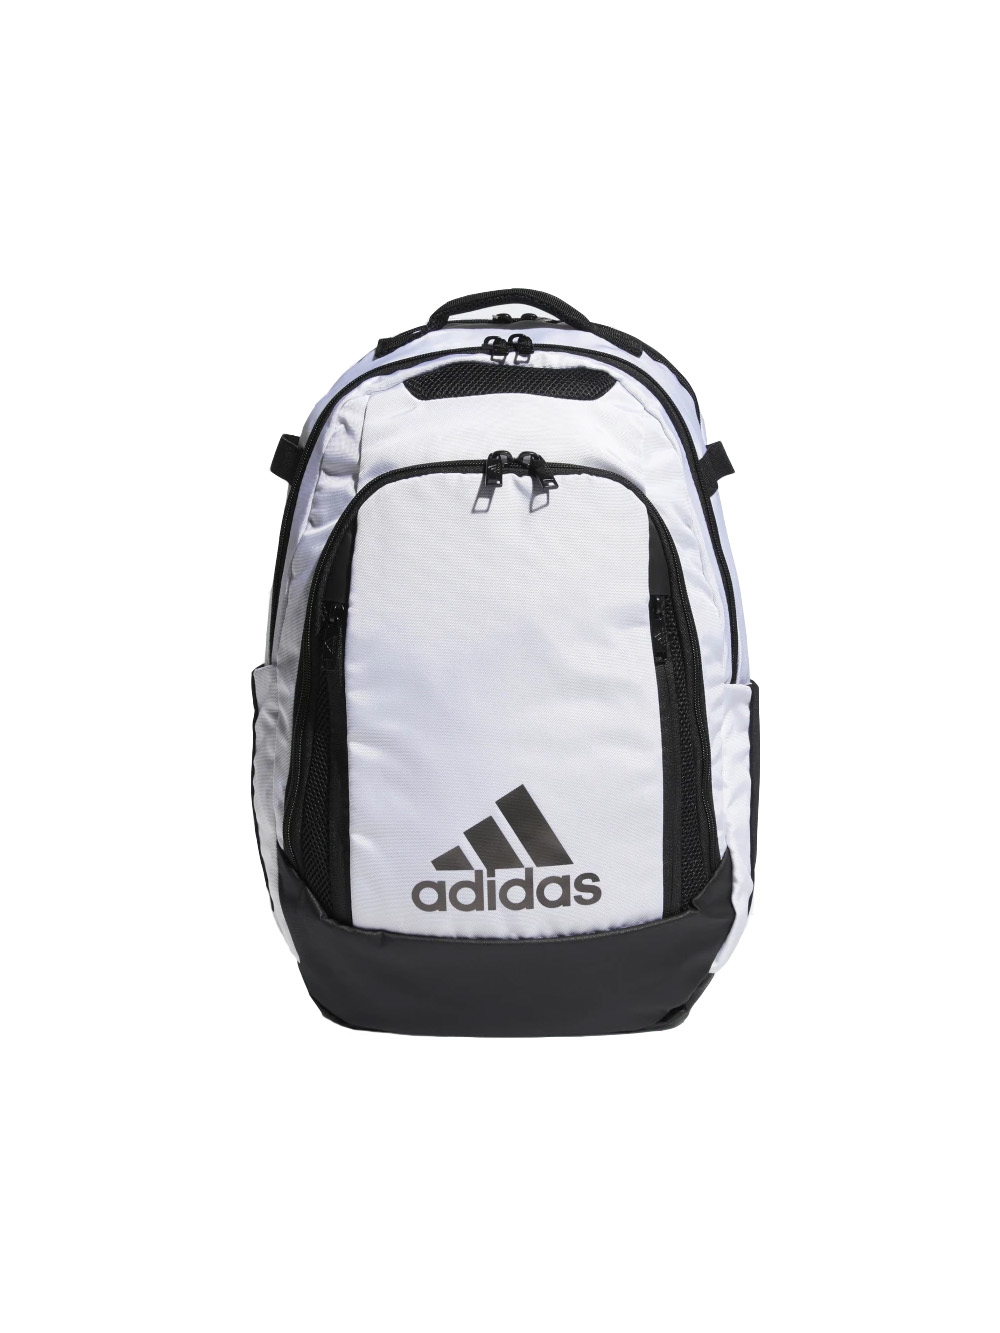 adidas 5 star team backpack